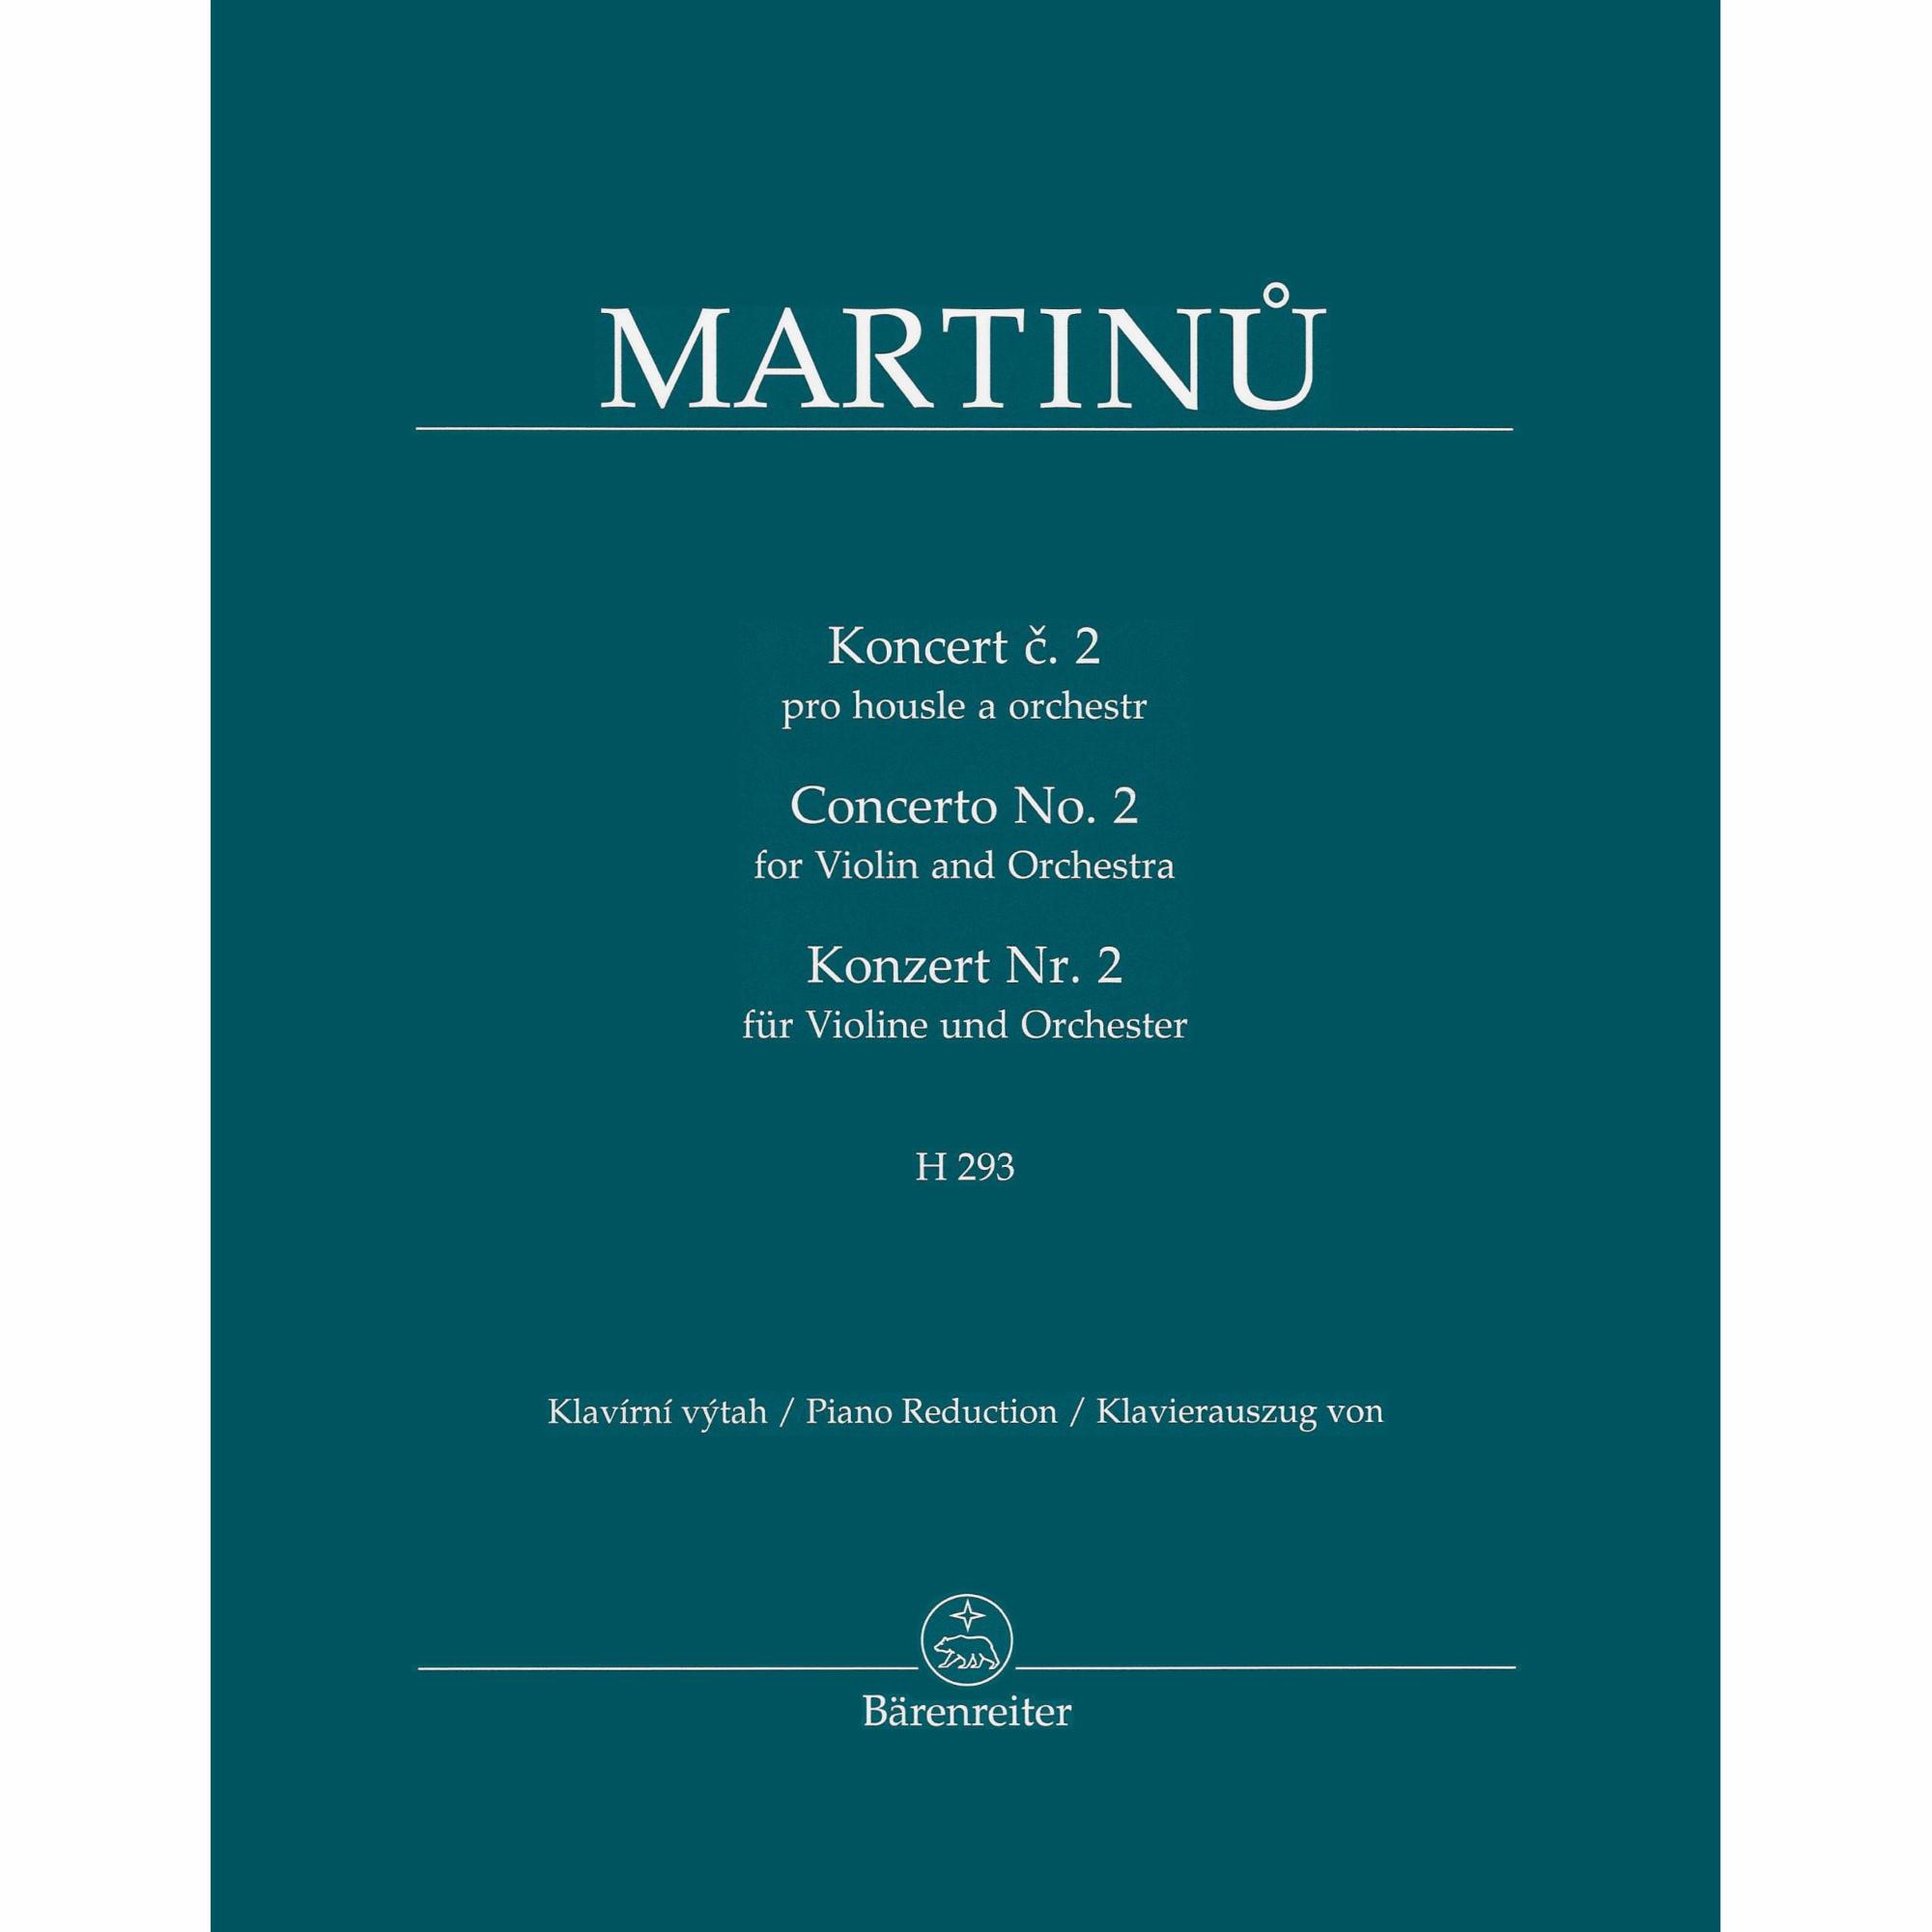 Martinu -- Concerto No. 2, H. 293 for Violin and Piano